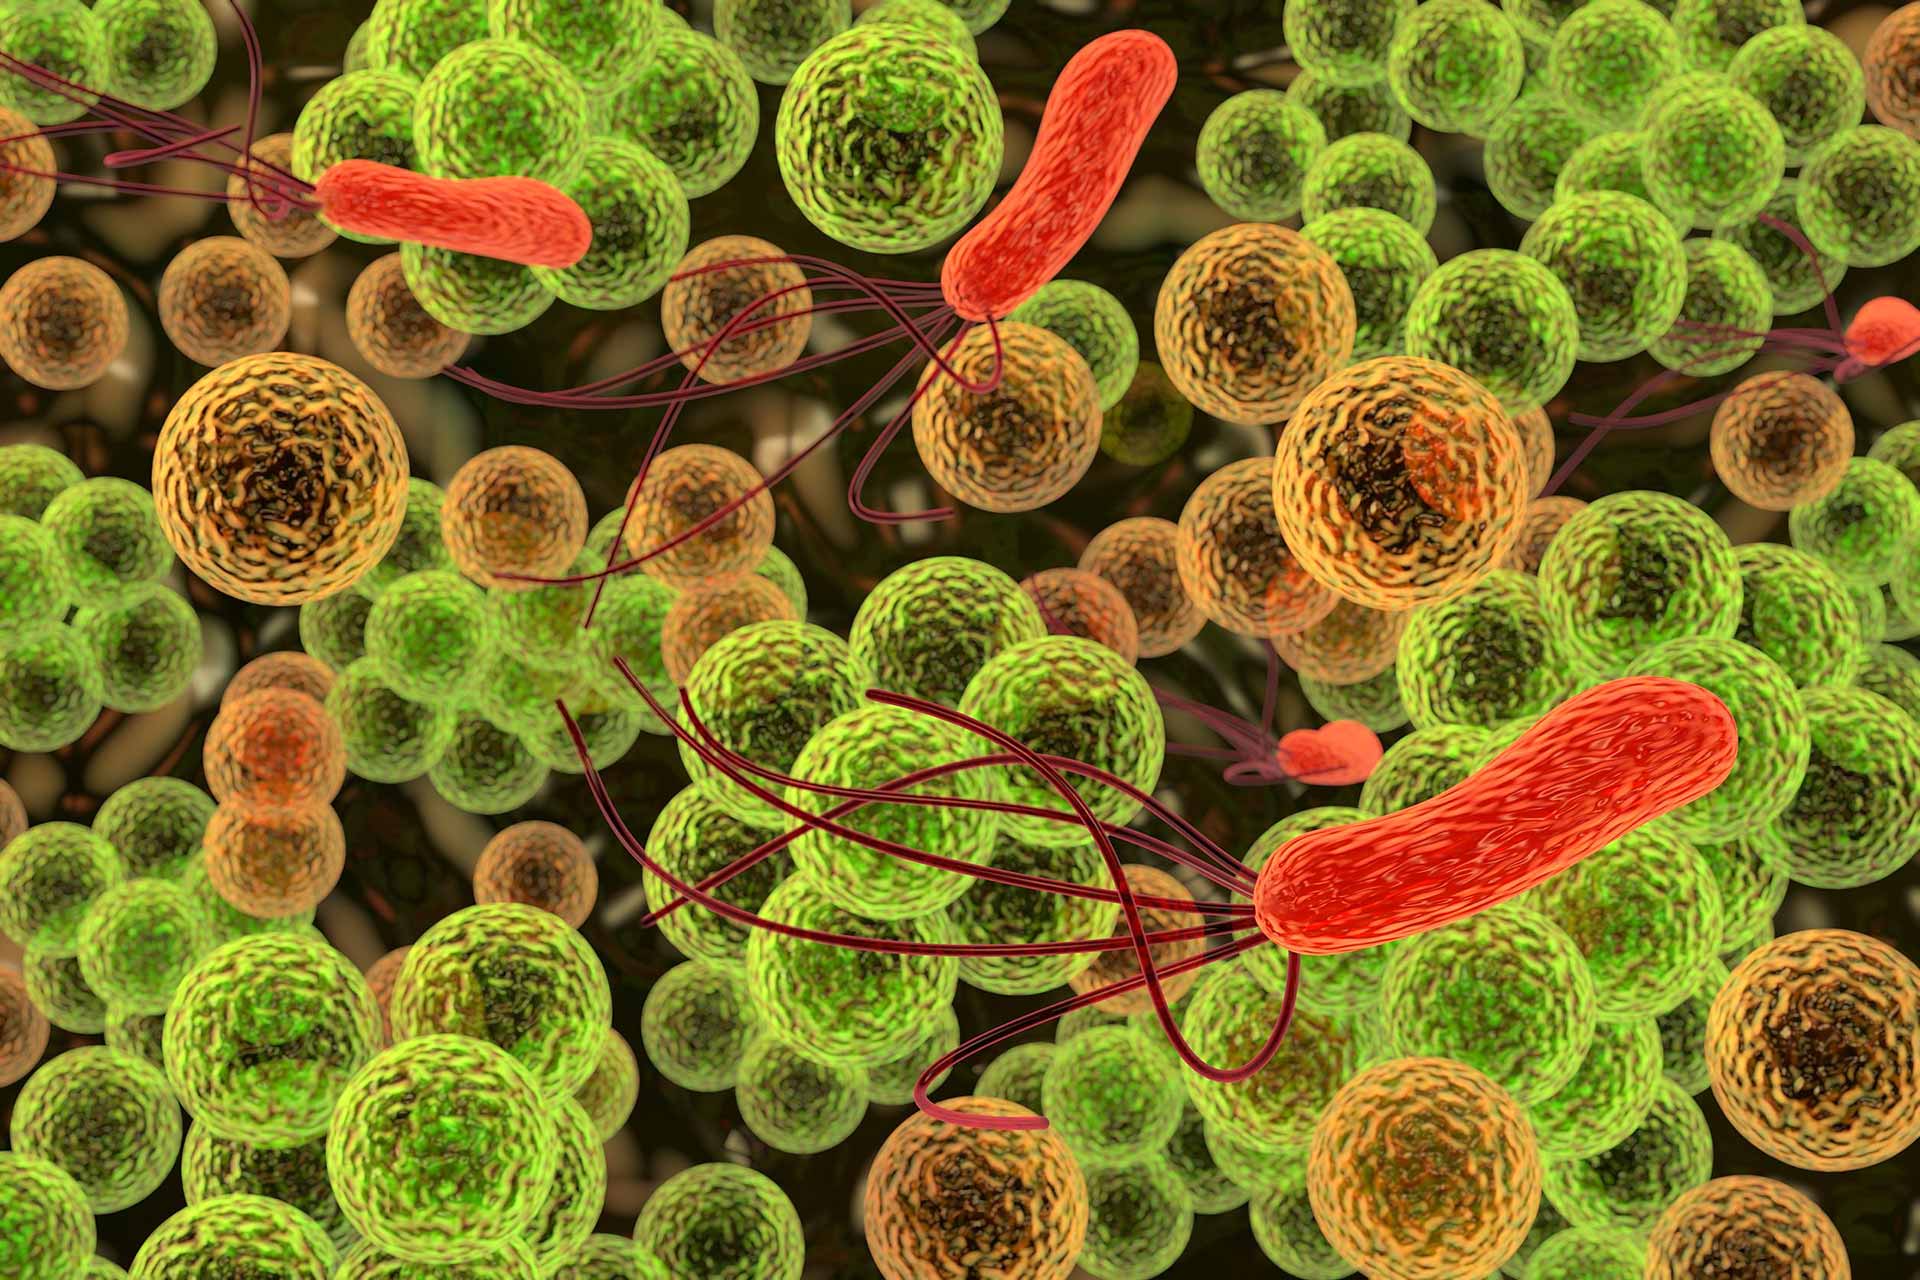 Bakterien (Einzeller, Prokaryoten) einfach erklärt